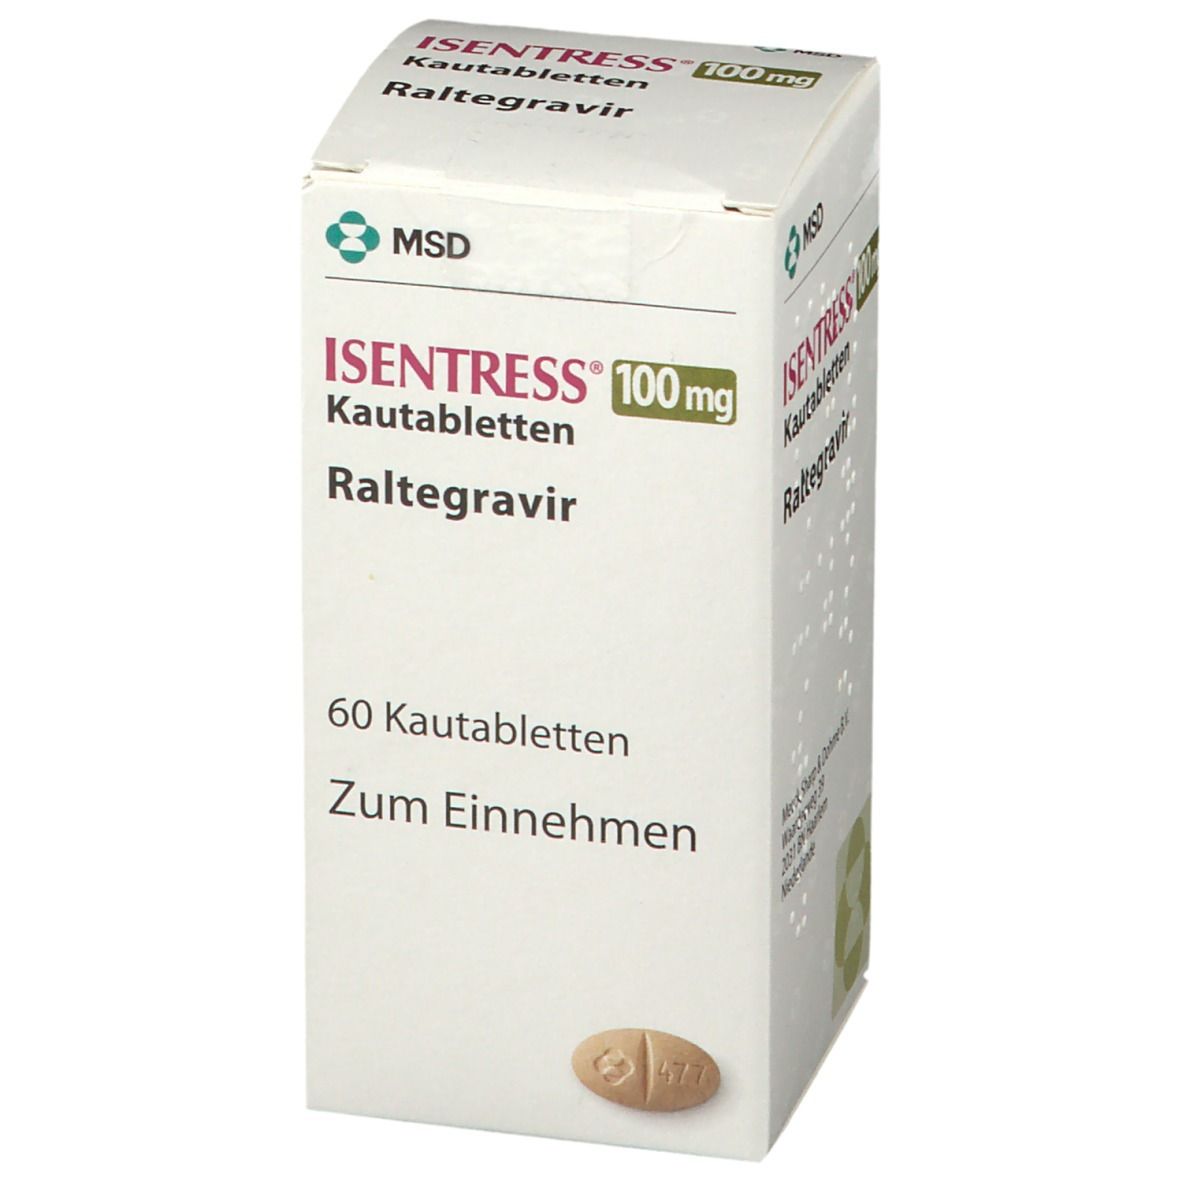 ISENTRESS® 100 mg